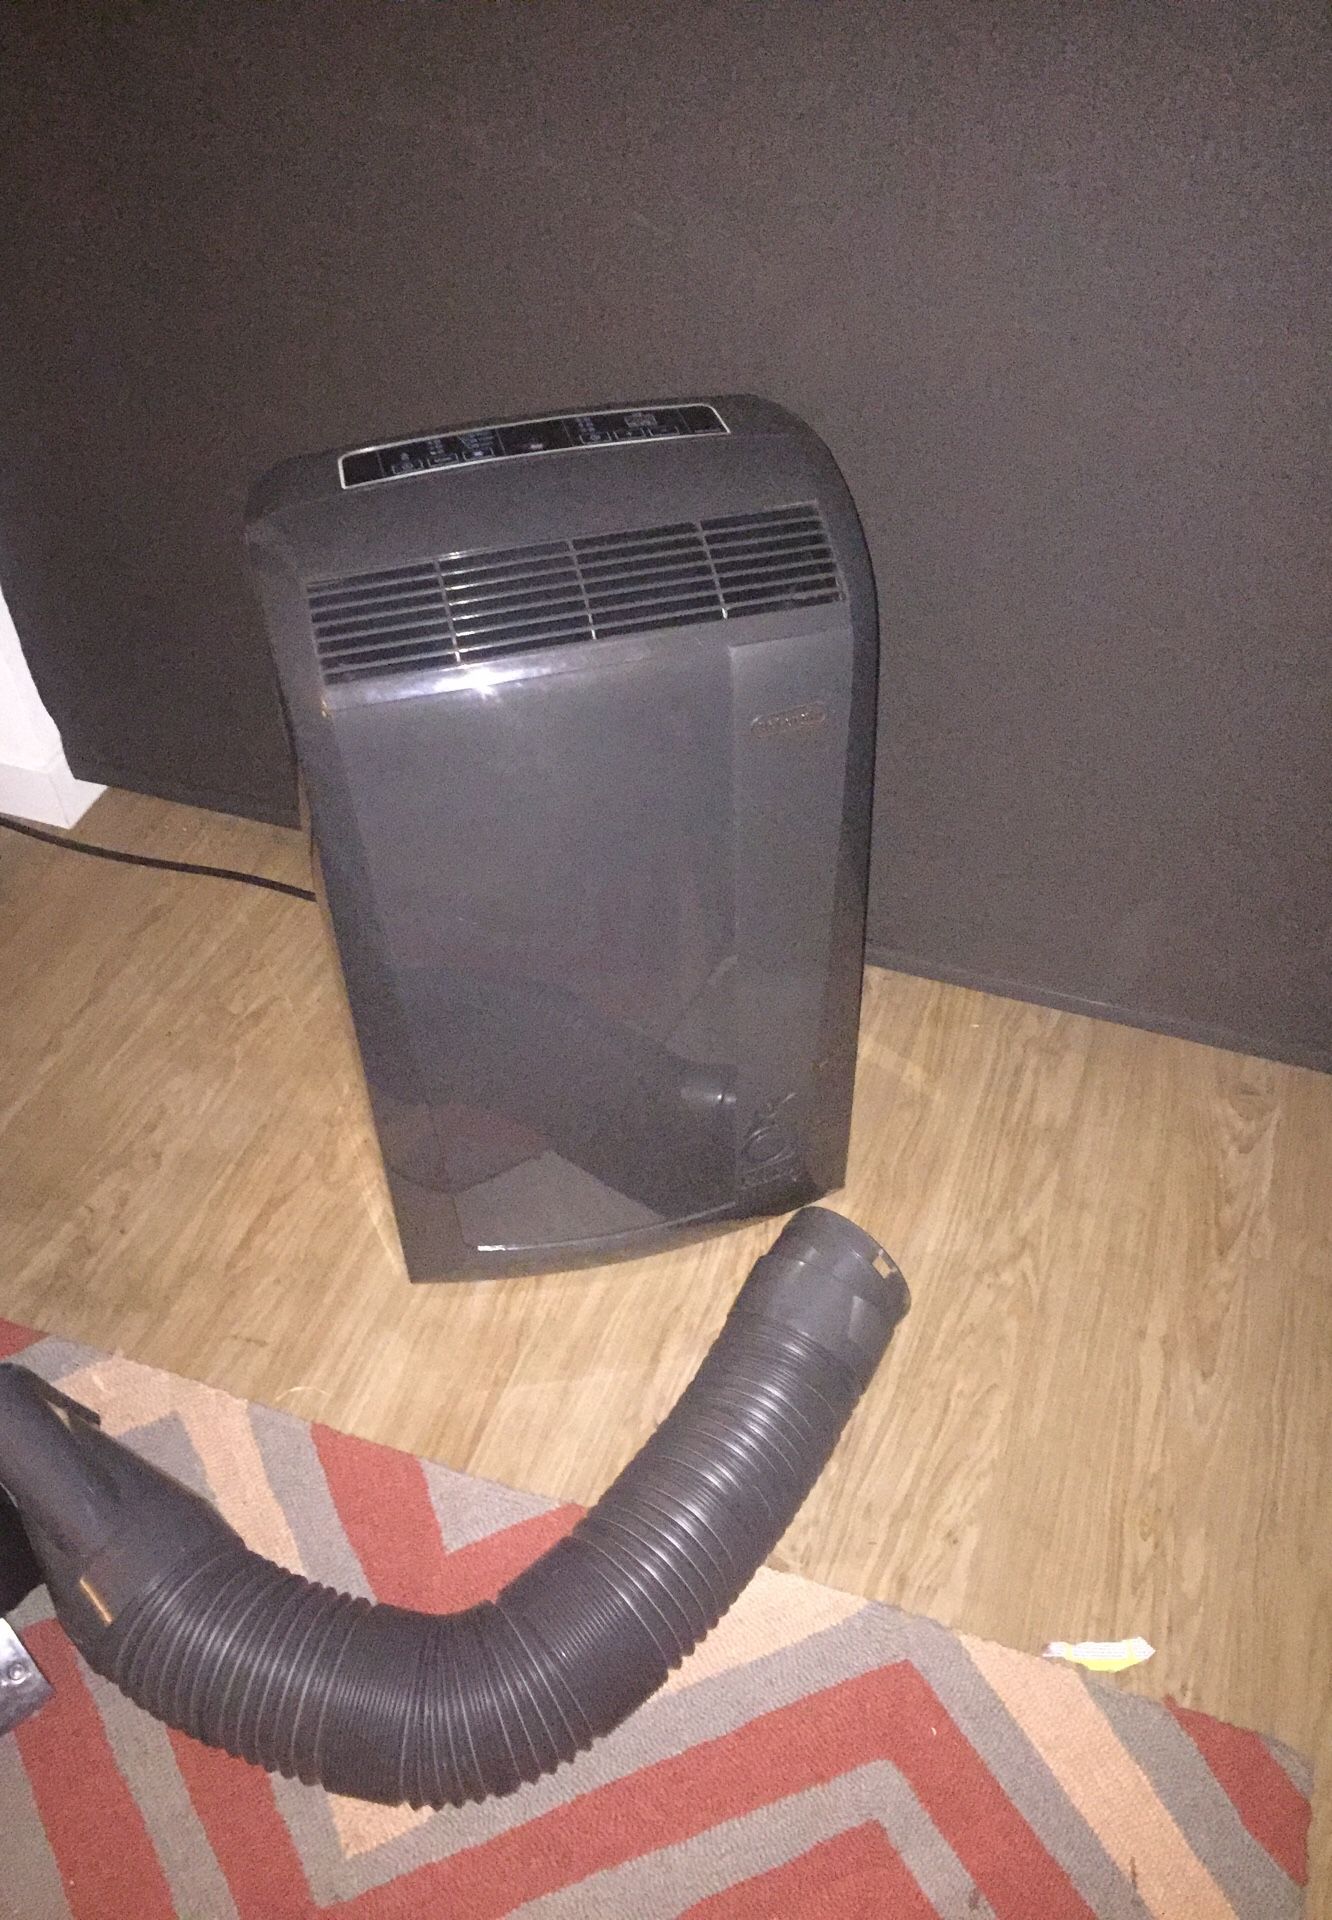 DēLonghi Air Conditioner